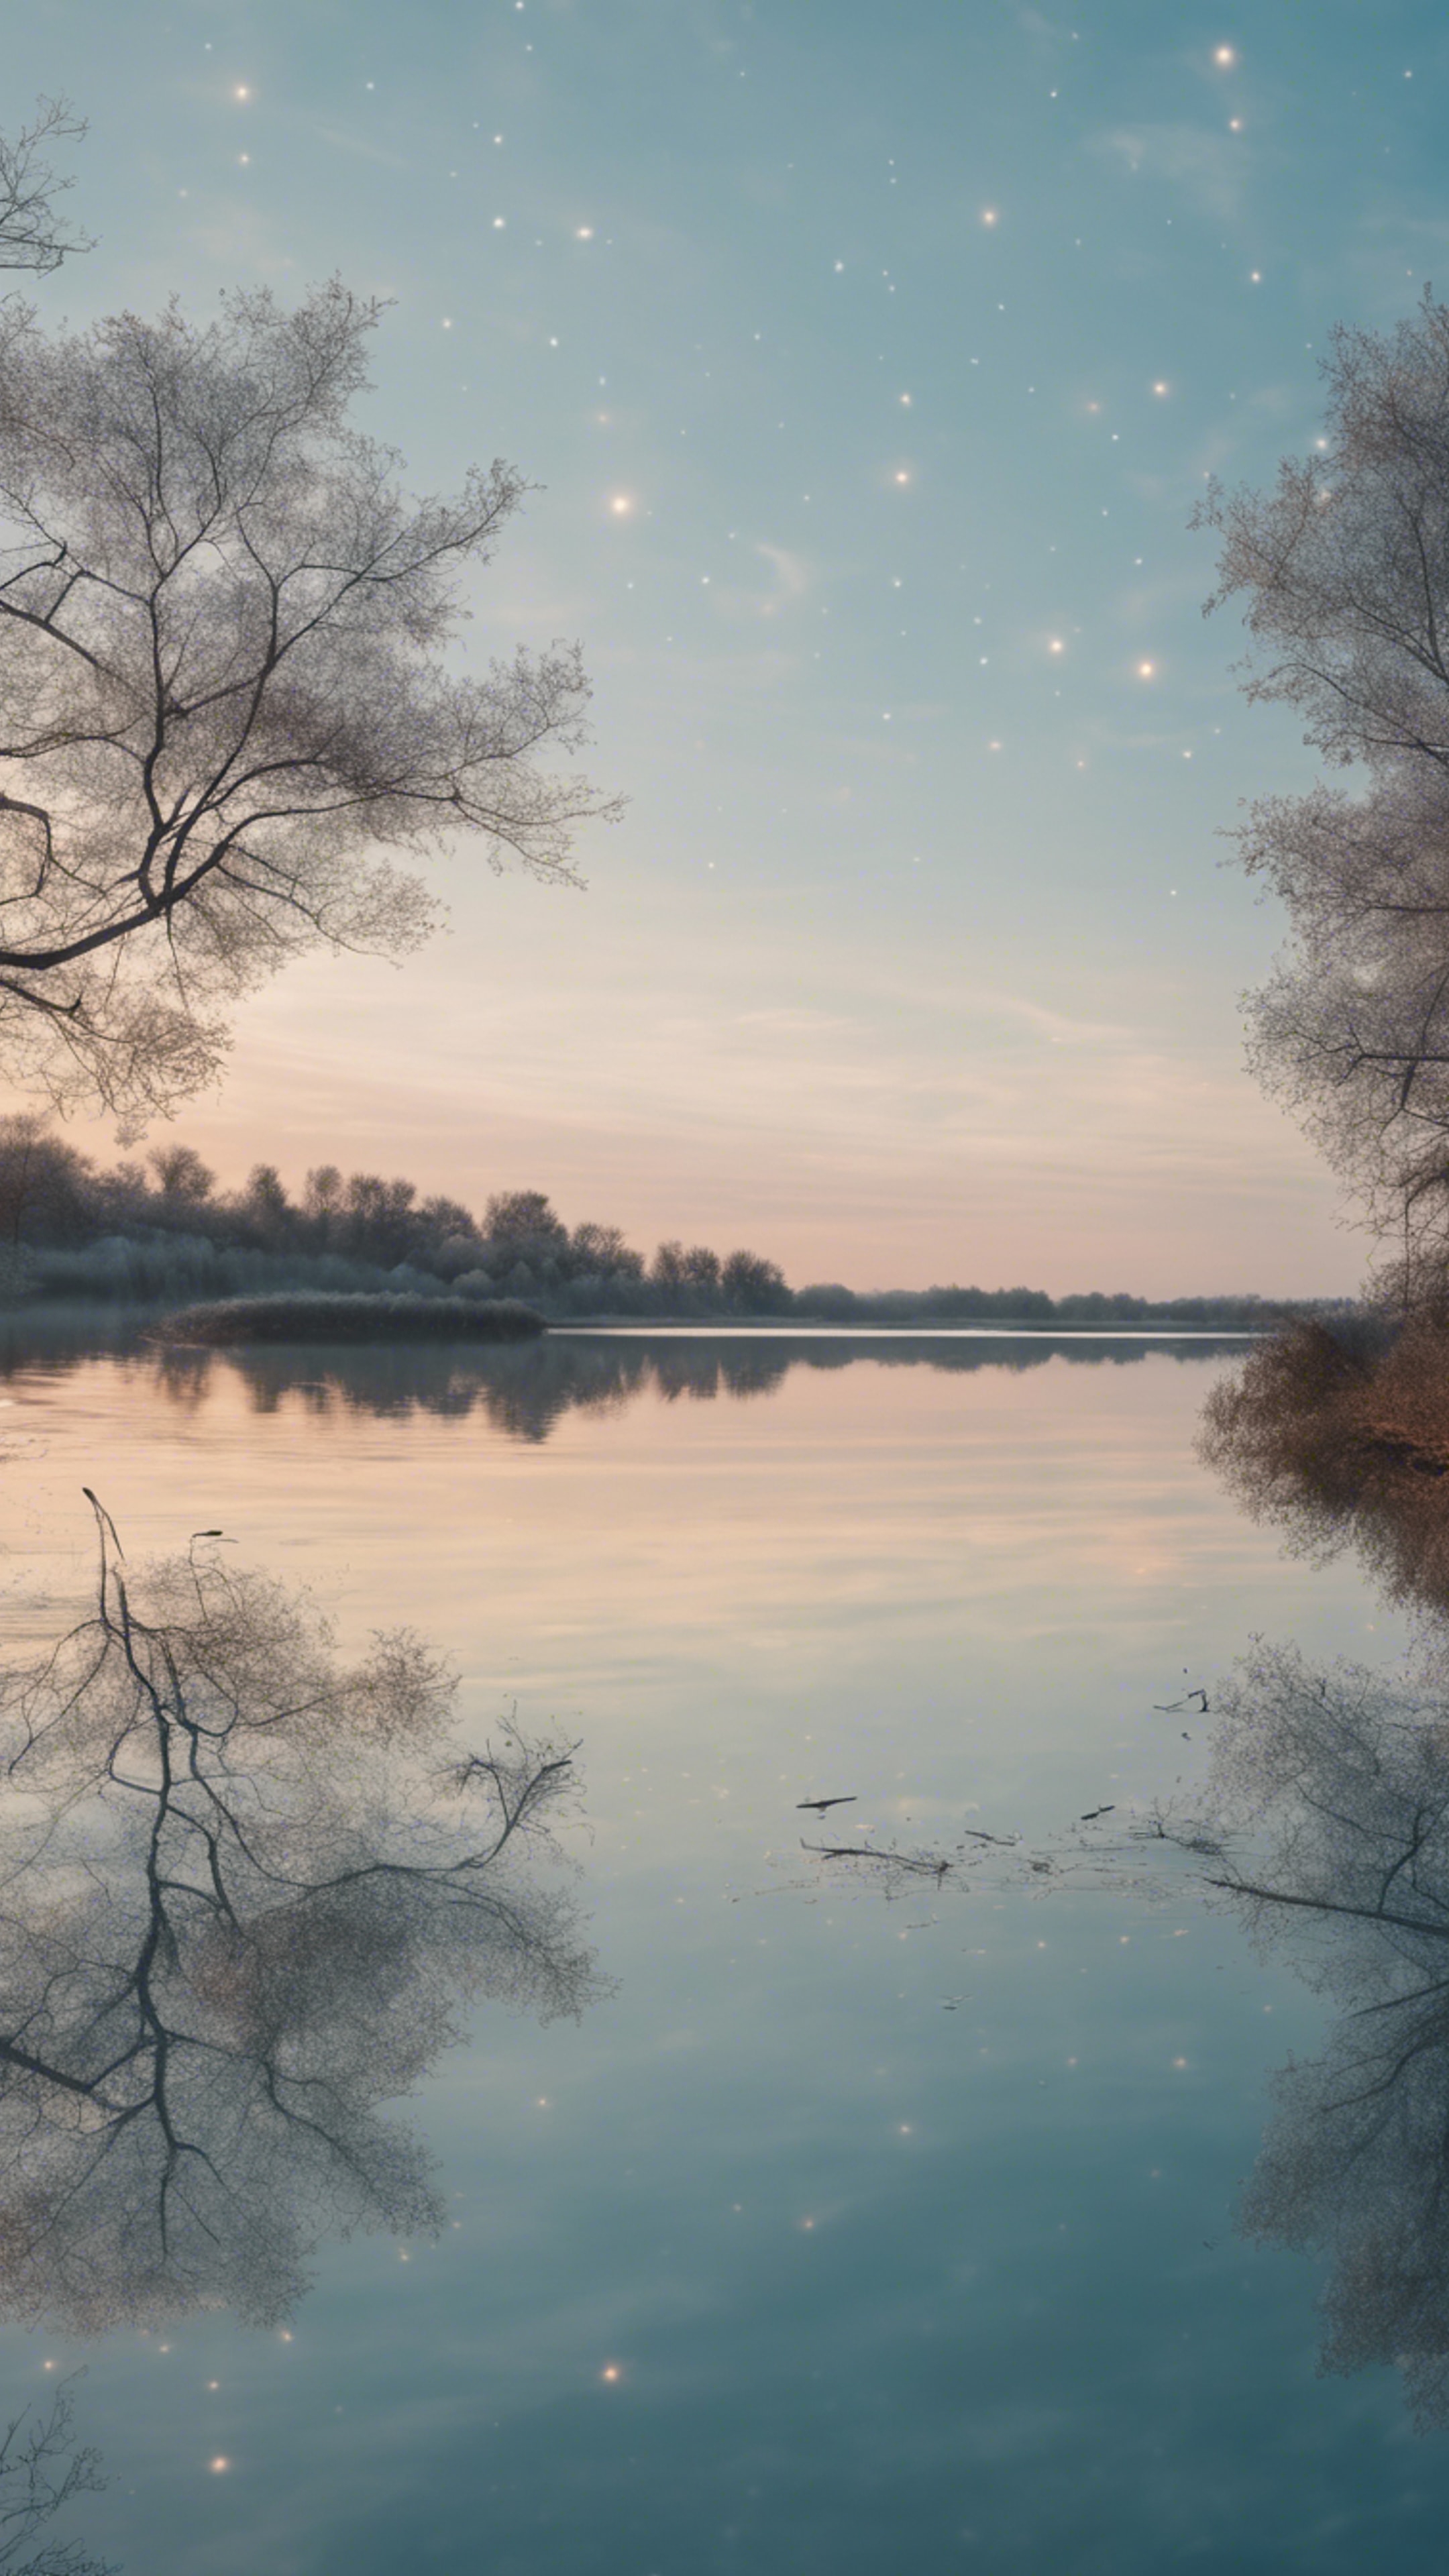 A pastel blue sky at dawn reflecting on a tranquil lake. Tapeta[f0afb54b812141669b7c]